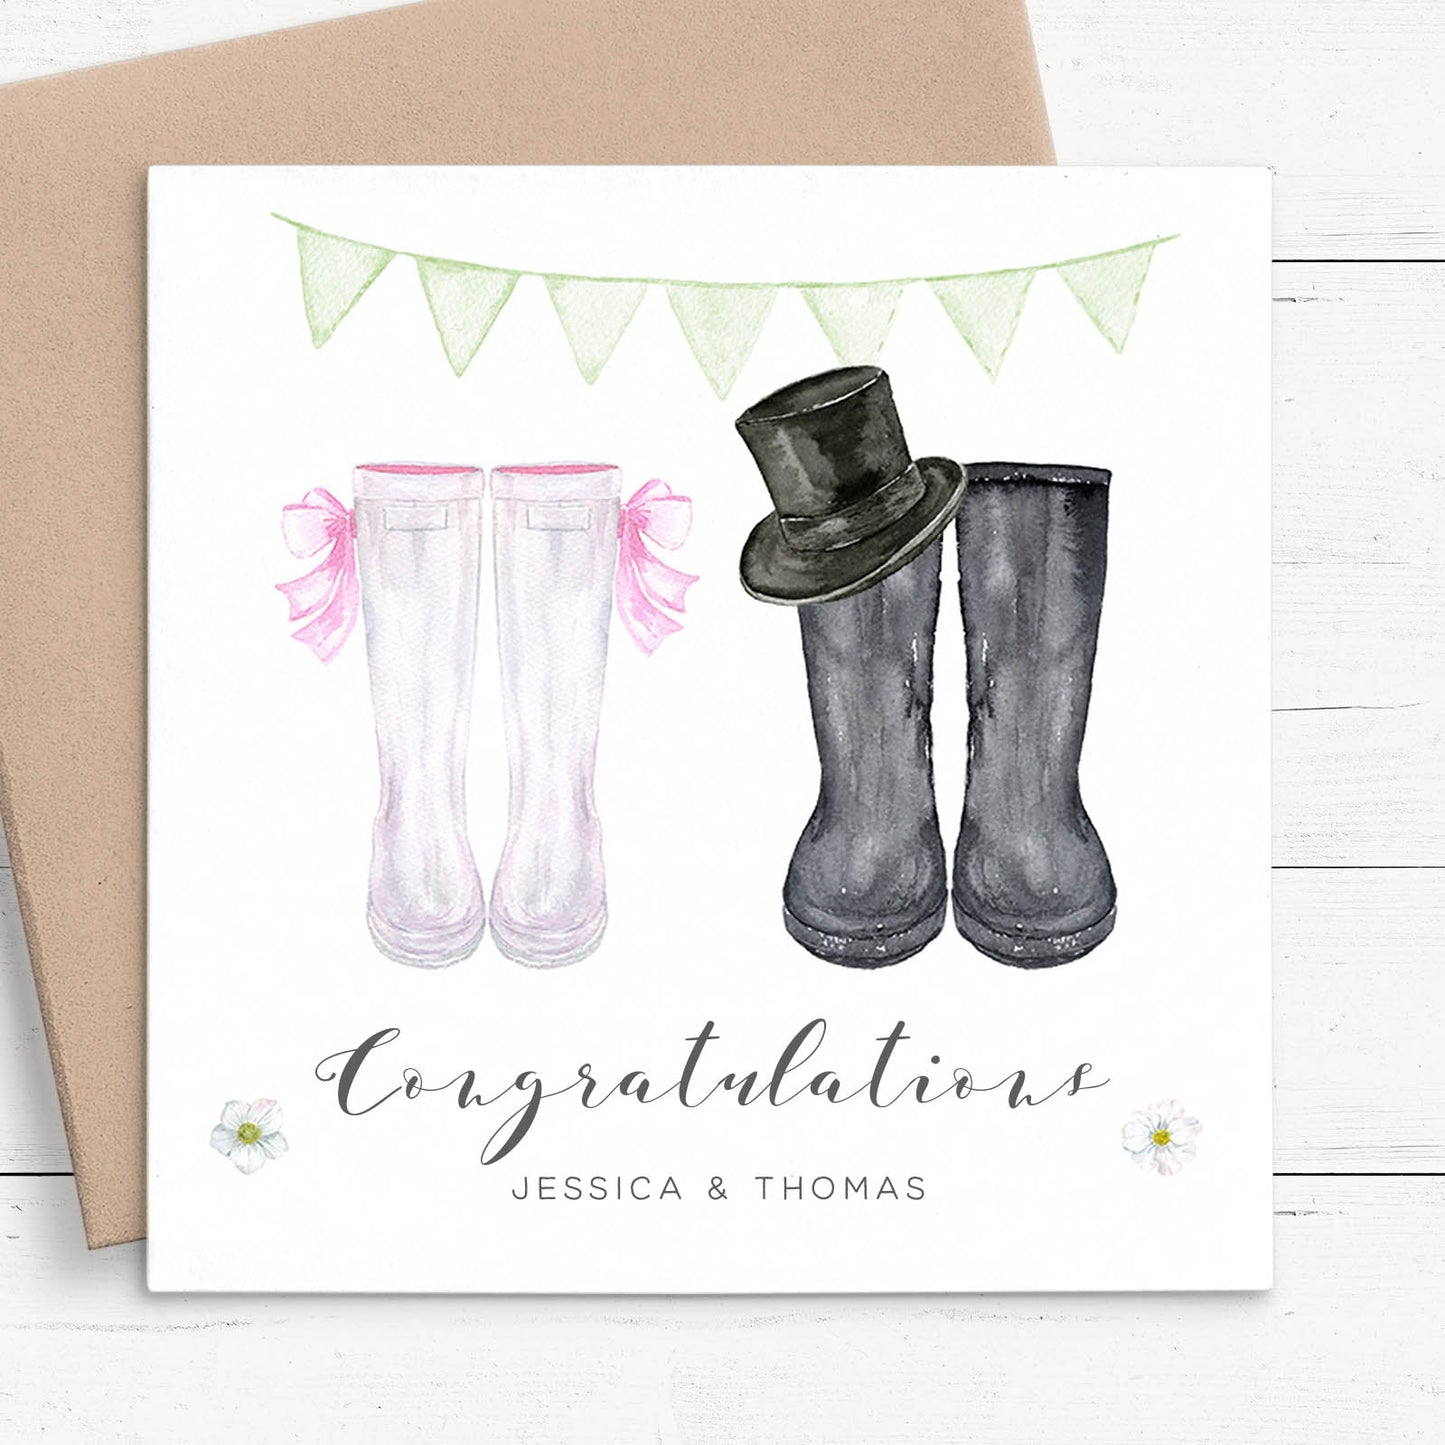 watercolour wellington boots wedding card bride and groom personalised matte smooth white cardstock kraft brown envelope